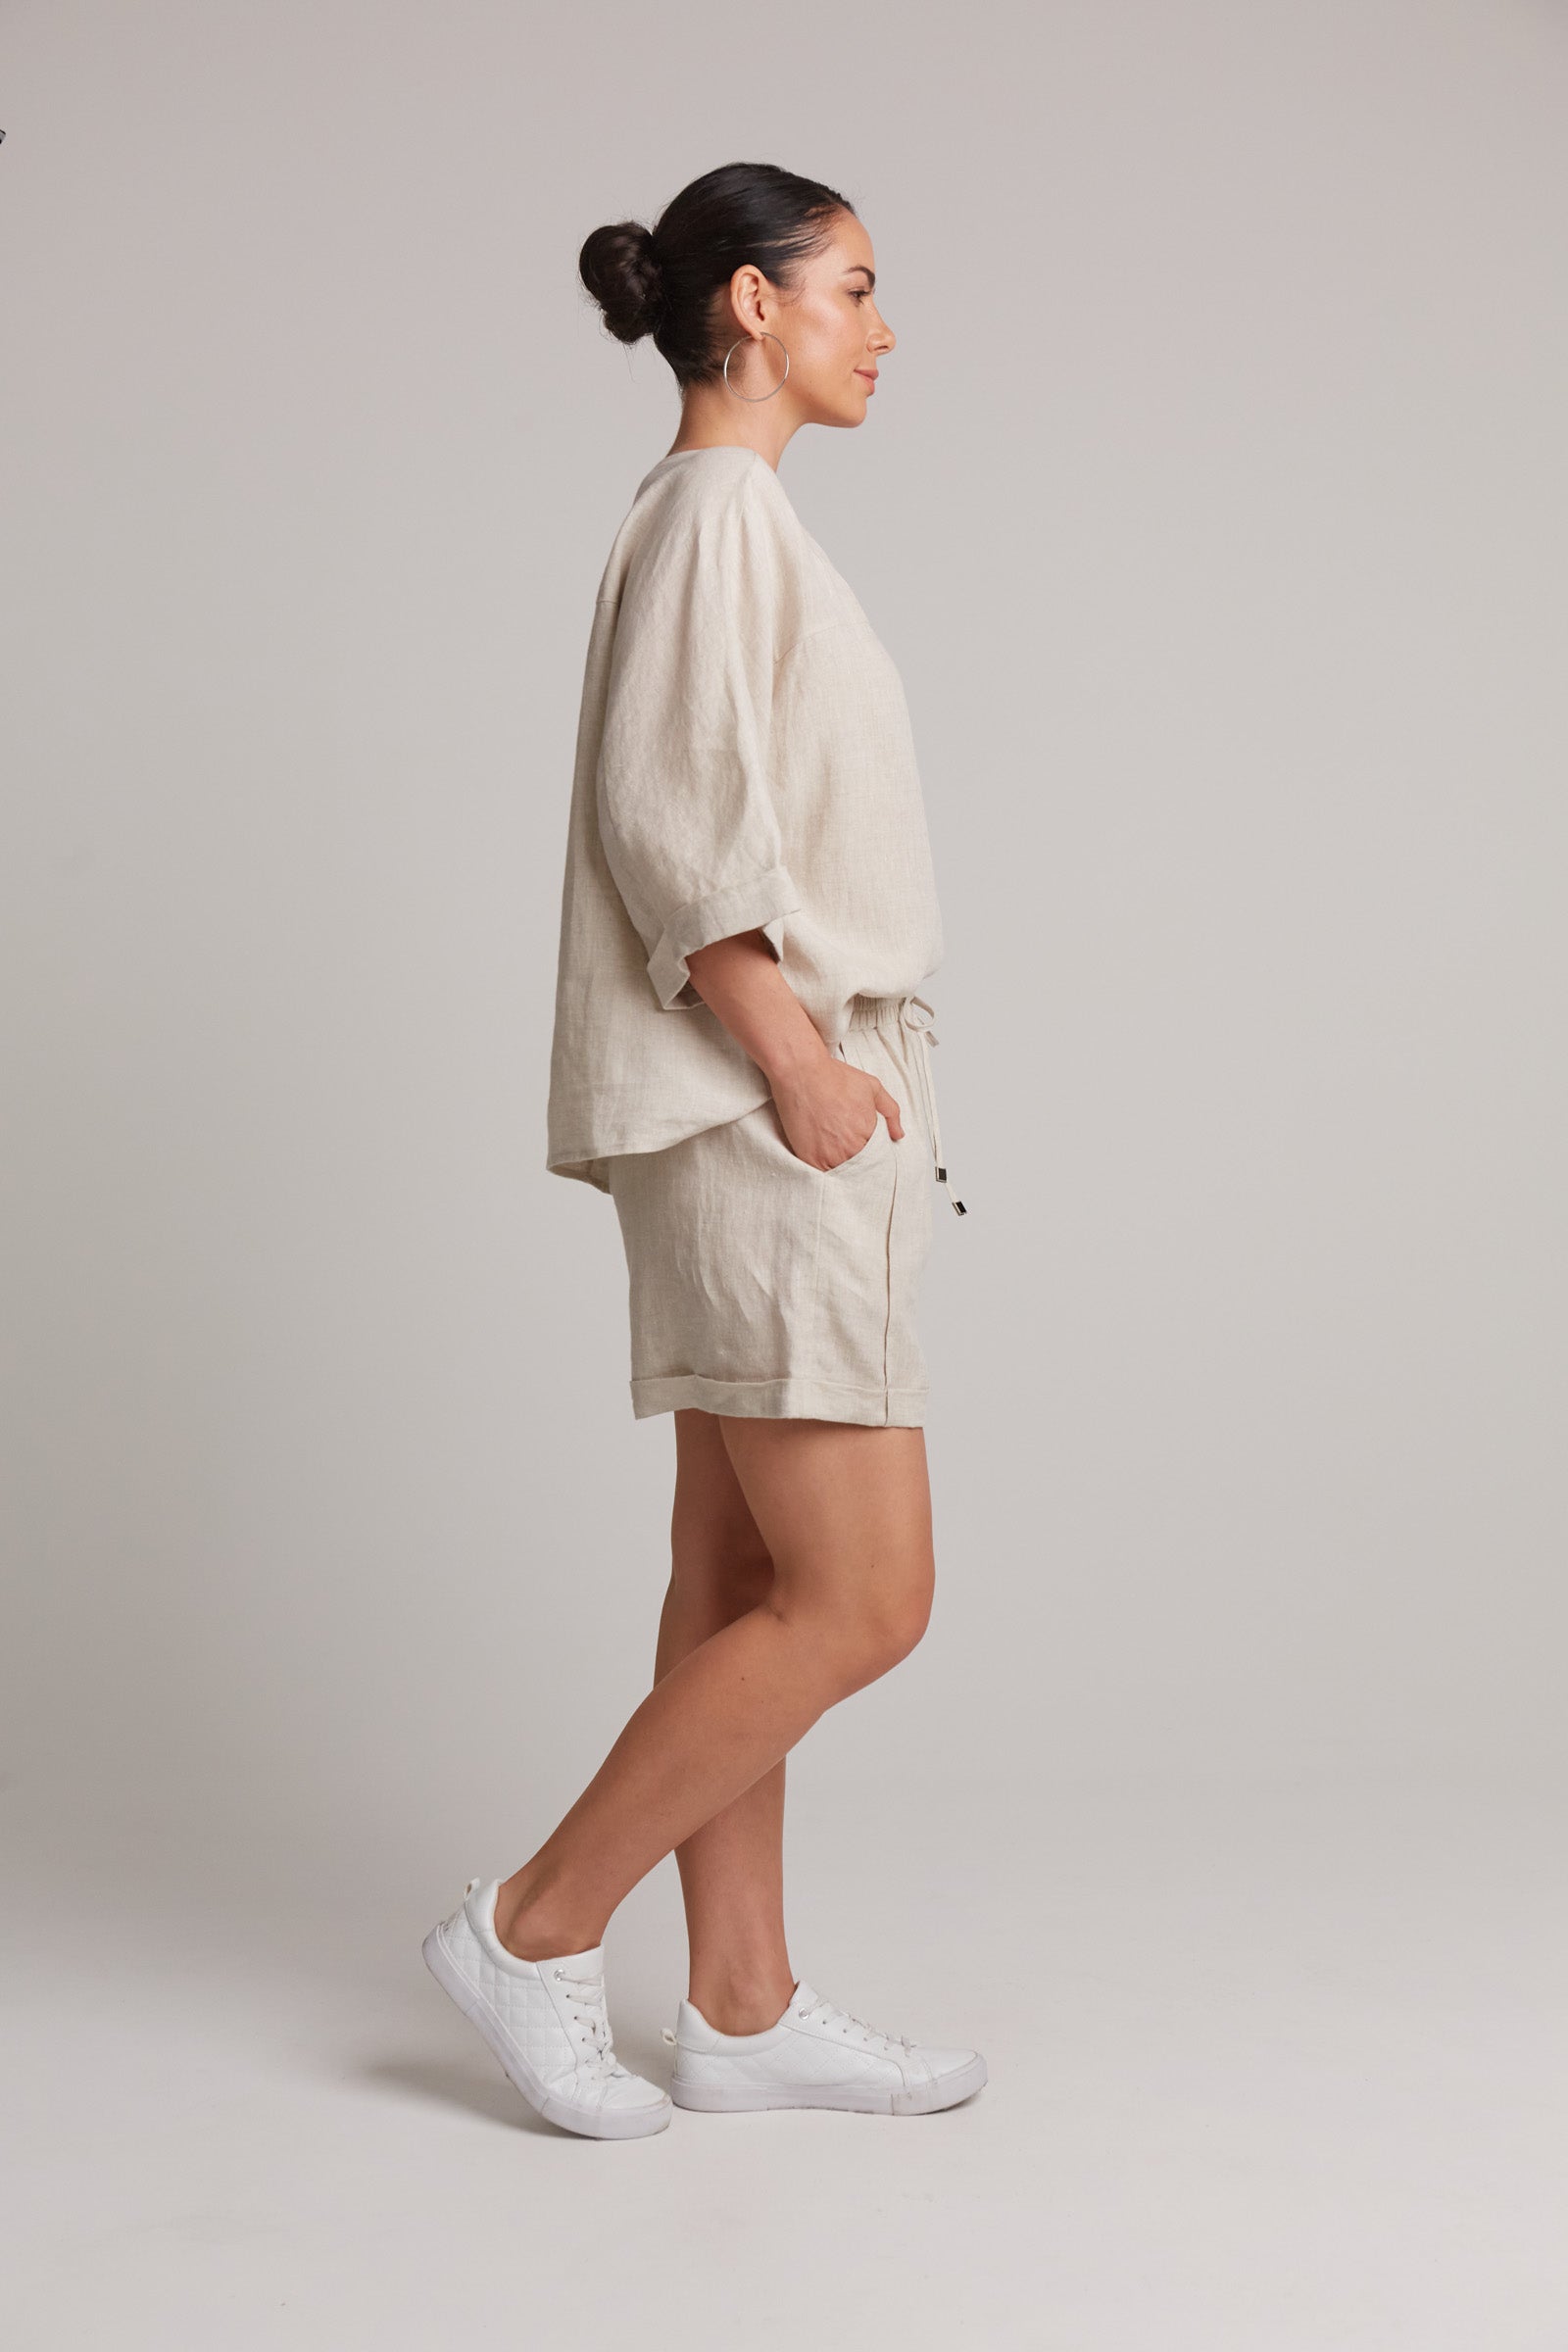 Studio Short - Tusk - eb&ive Clothing - Short Linen